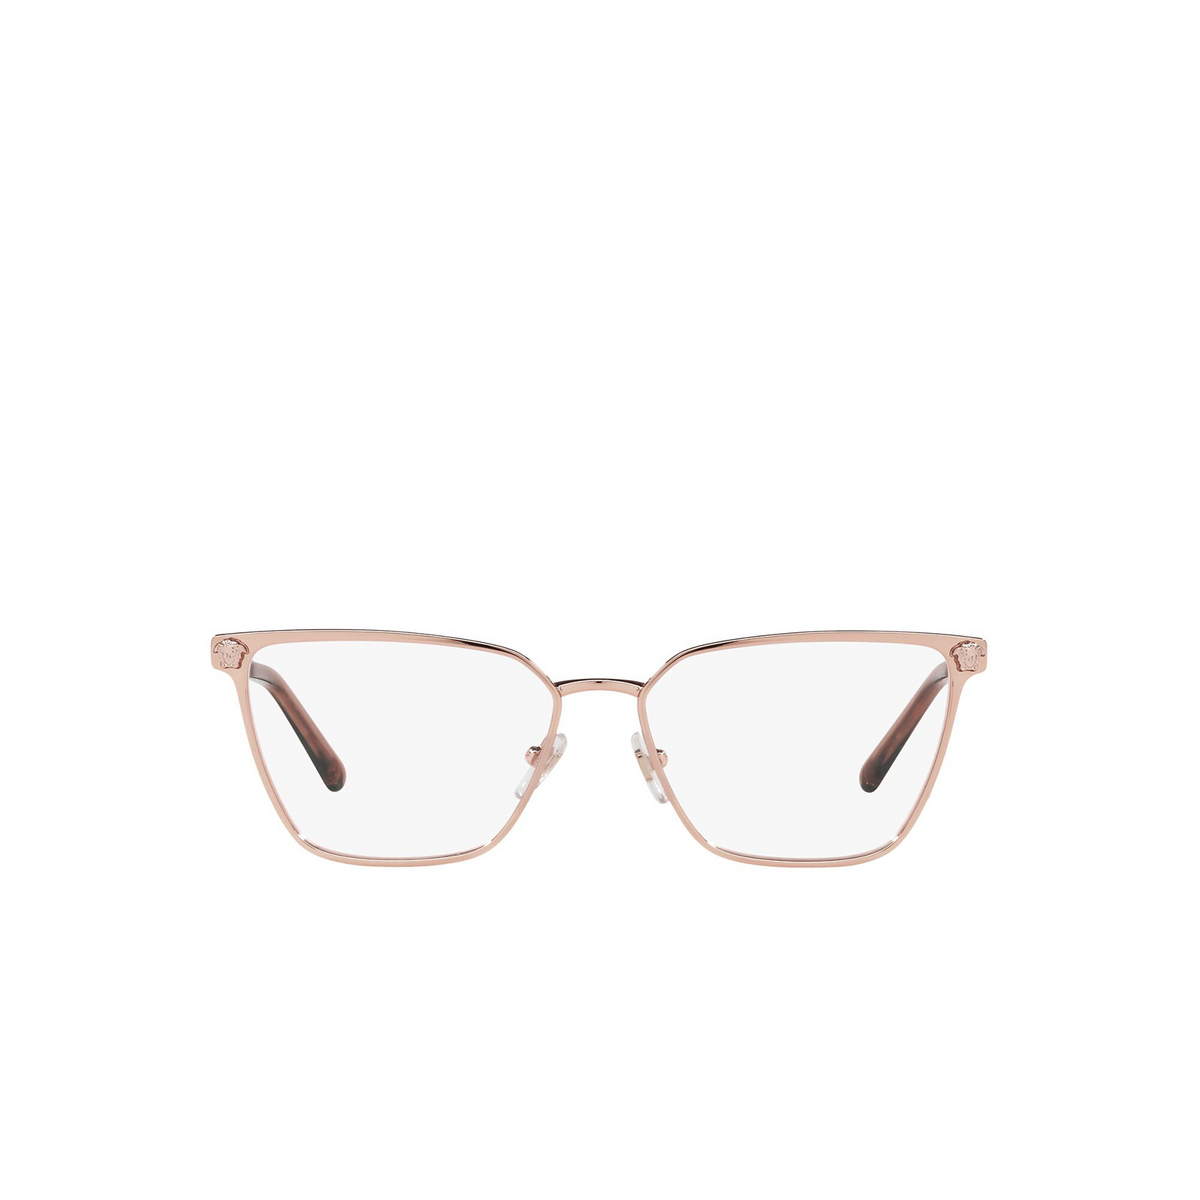 Versace® Square Eyeglasses: VE1275 color Rose Gold 1412 - front view.